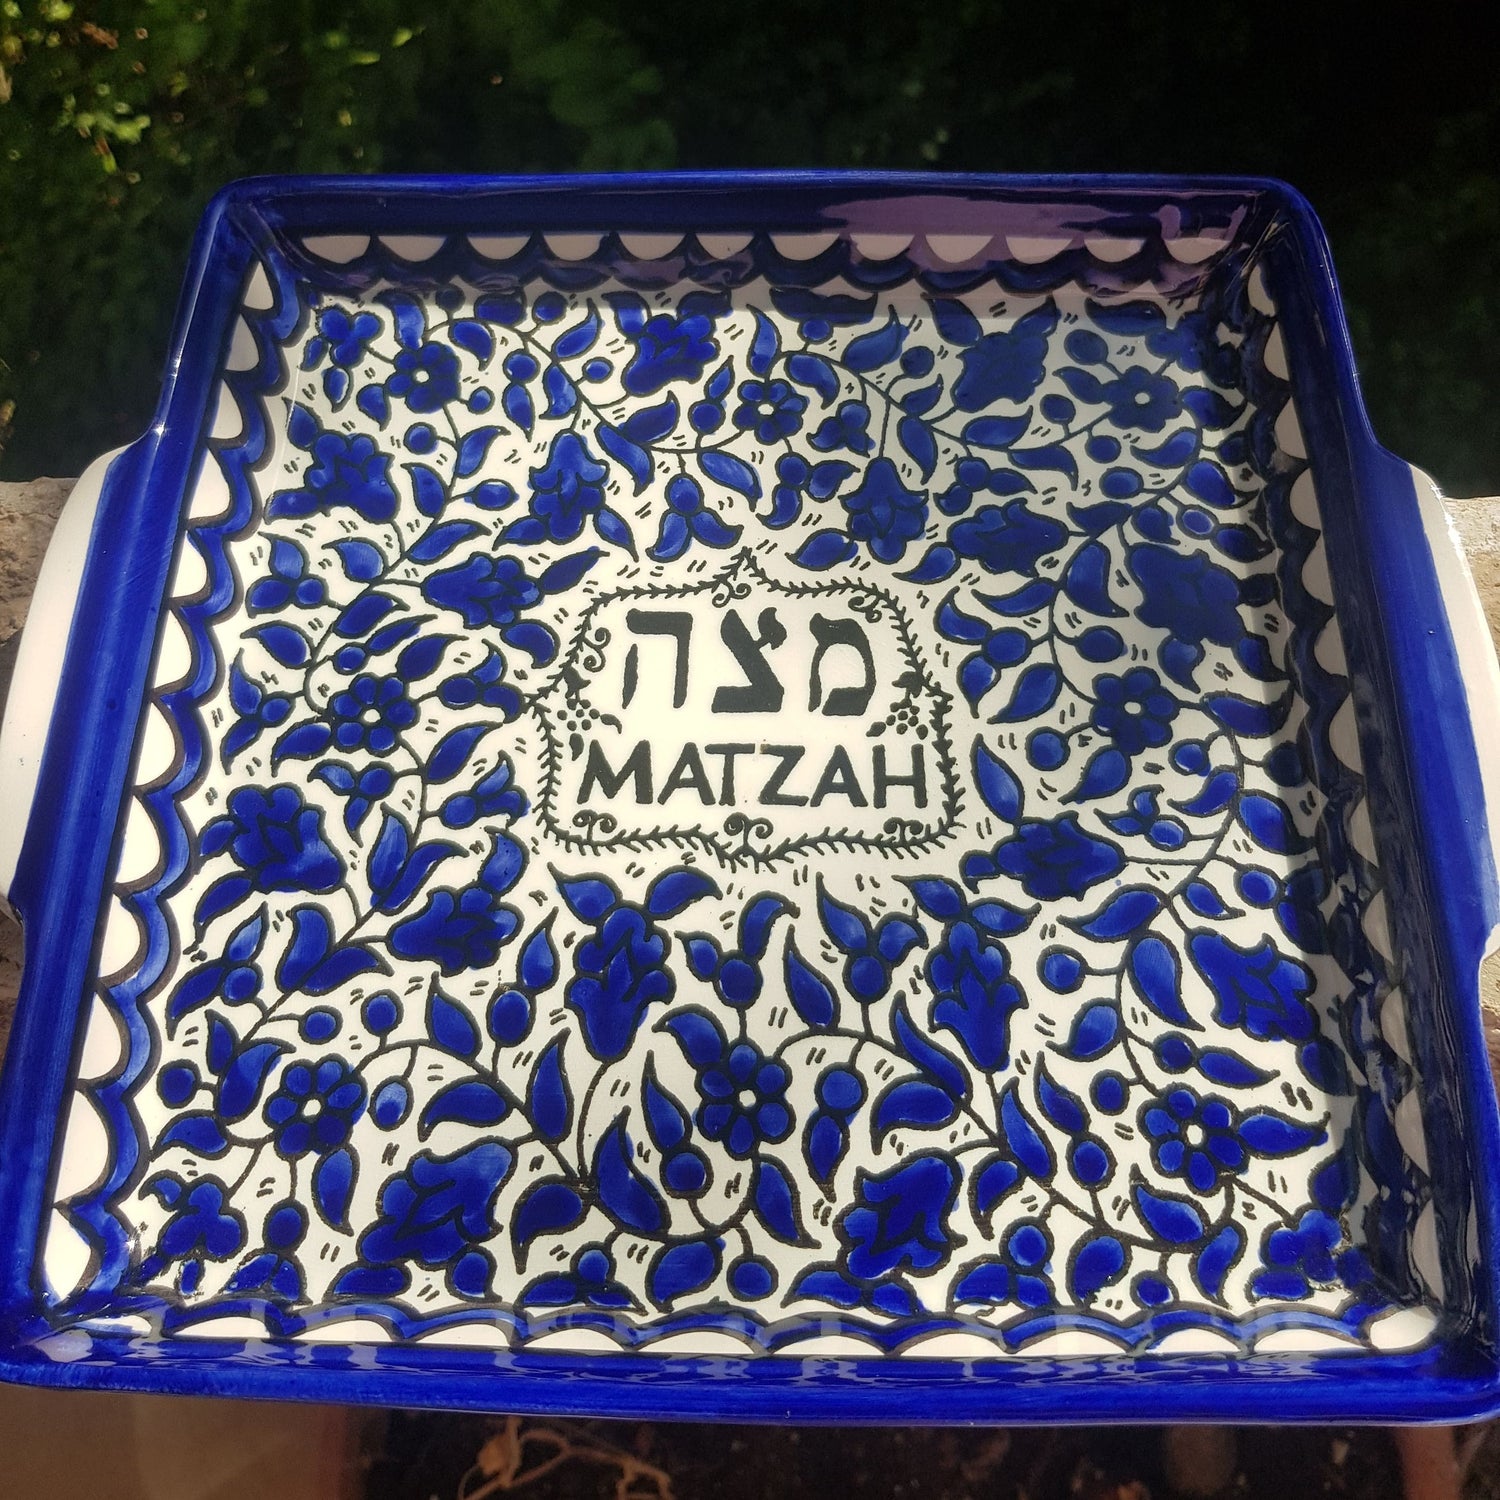 Bluenoemi Jewelry Plate 24 cm / Blue and White Bluenoemi Armenian Ceramics Matza Plate for Passover Jewish Table